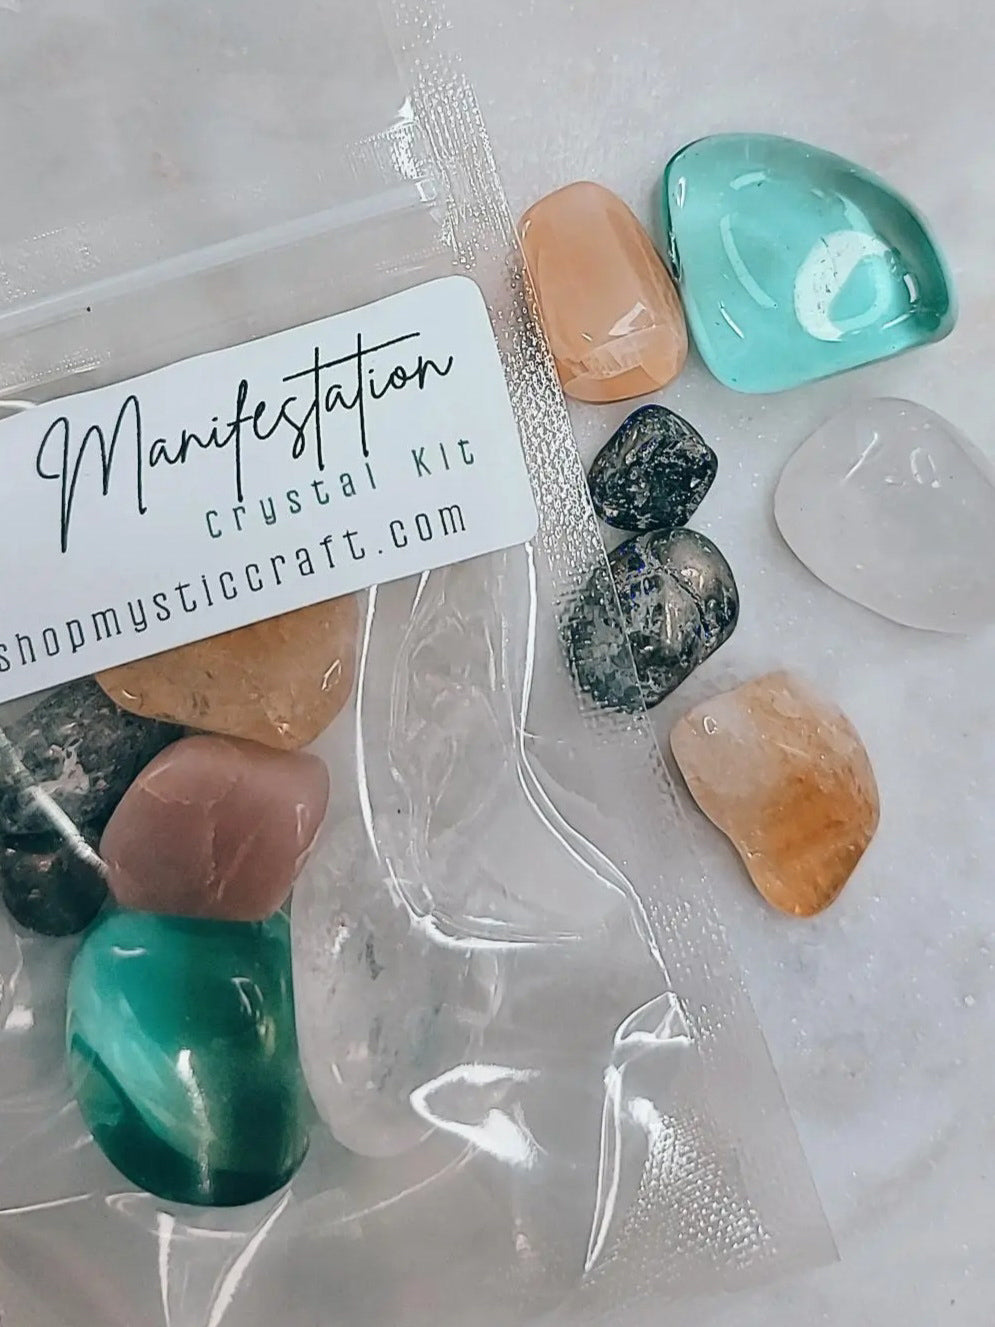 Manifestation Crystal Kit